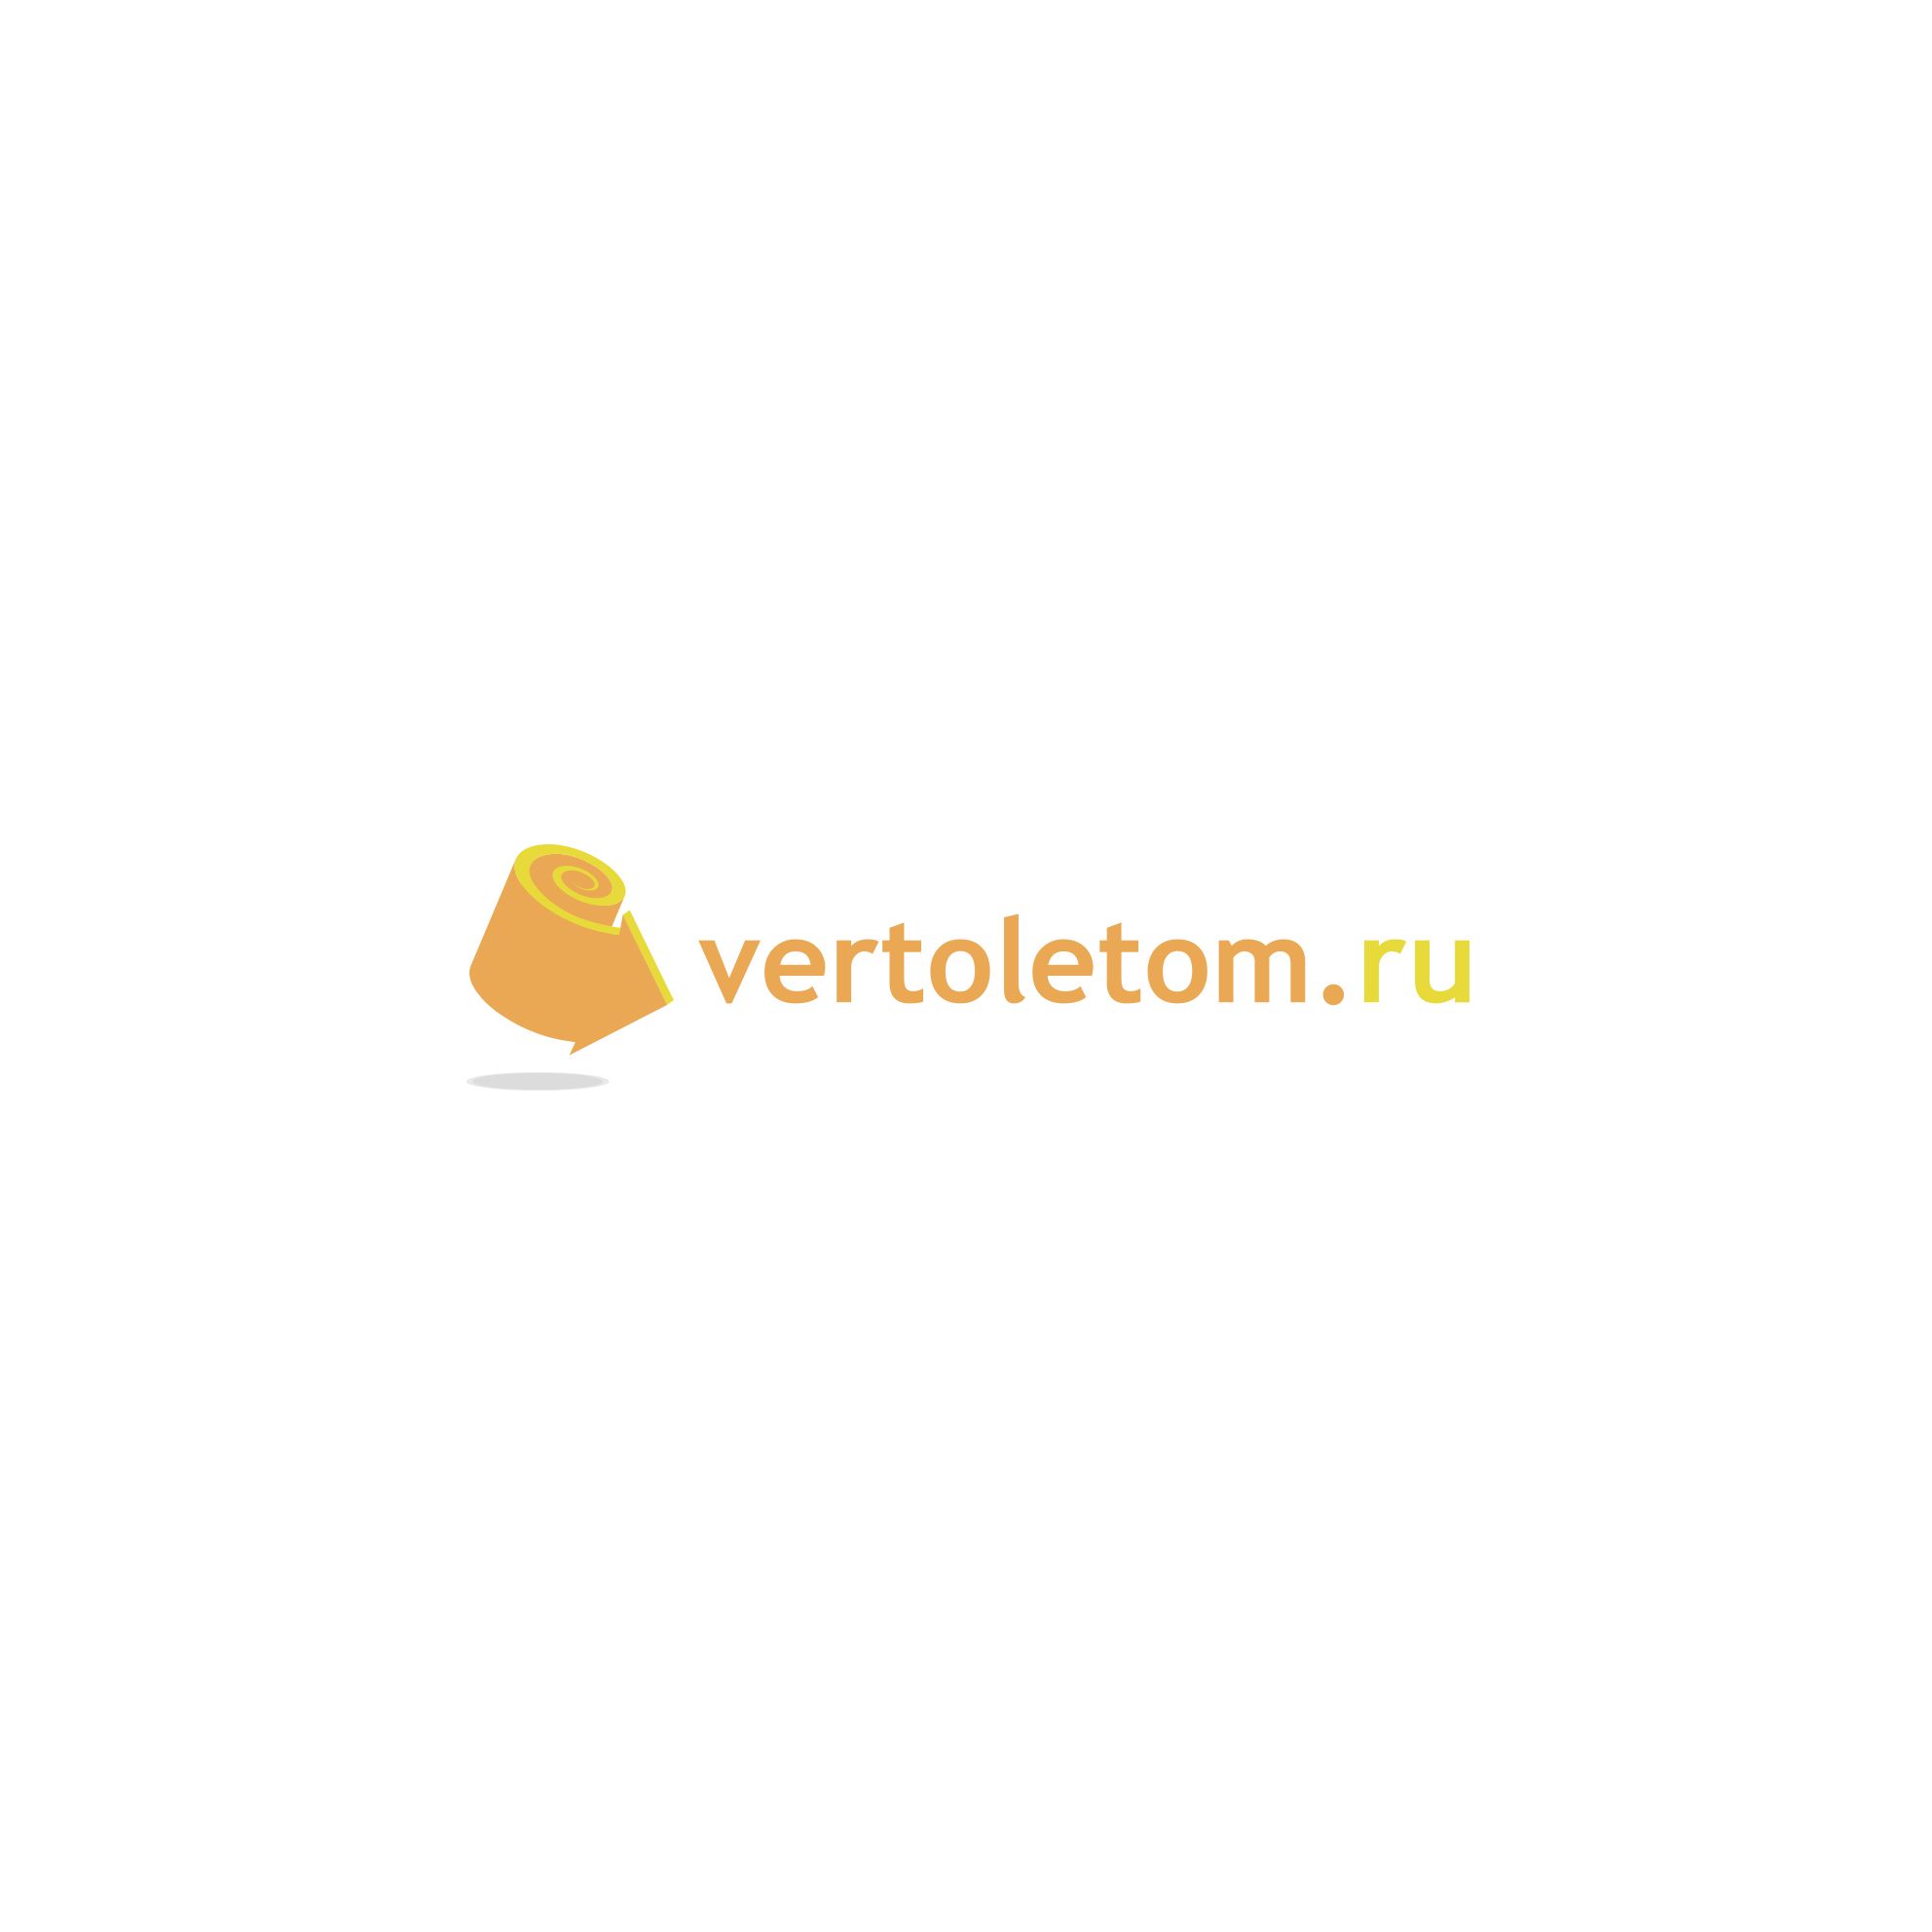 Логотип для vertoletom - дизайнер mkravchenko